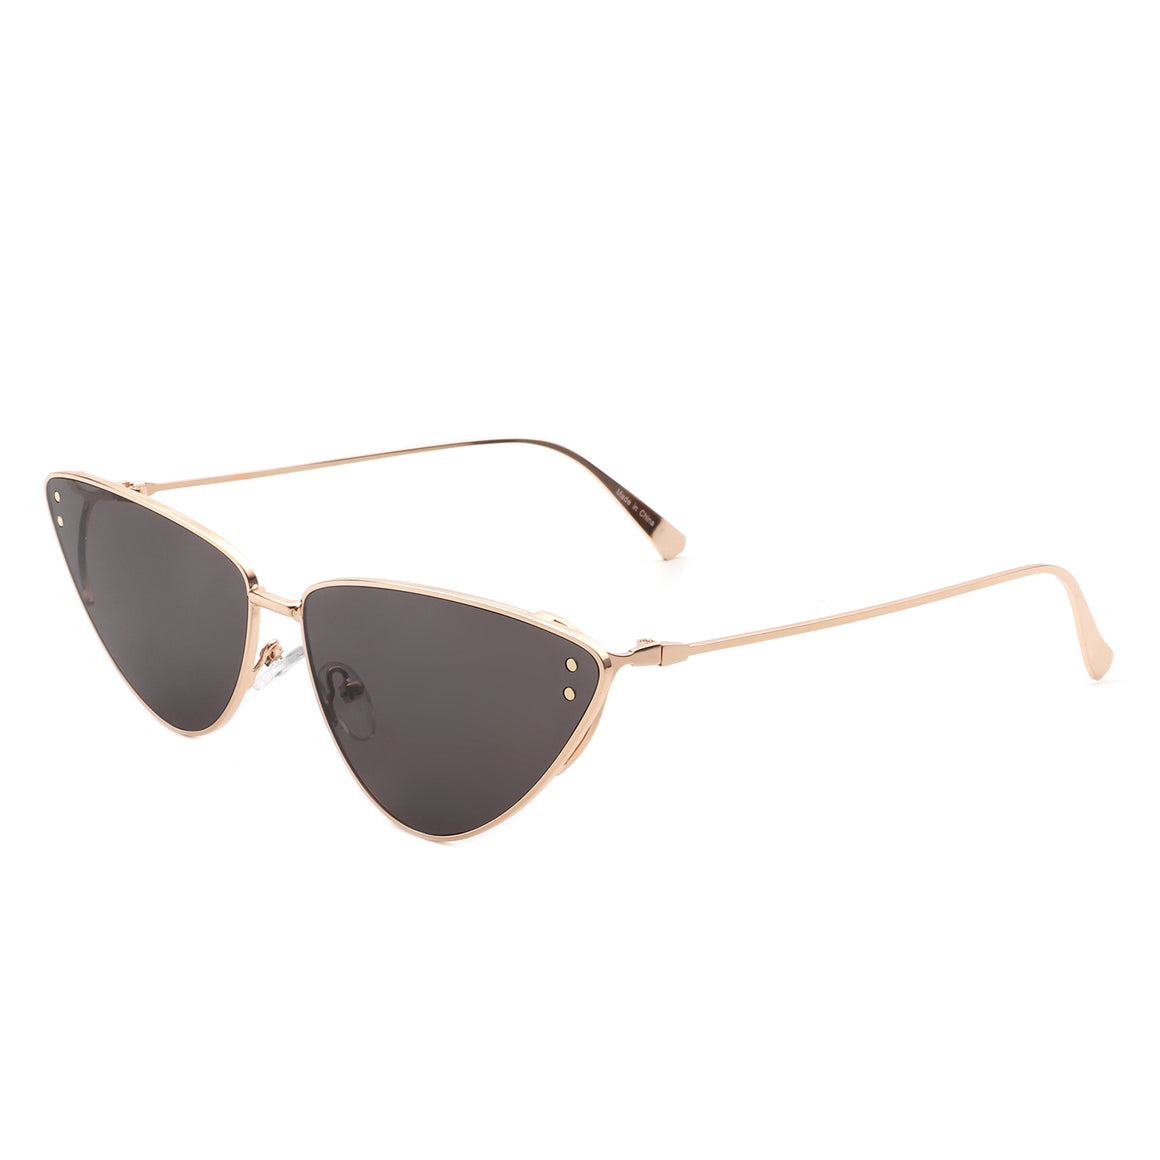 Windflow - Retro Tinted Flat Lens Fashion Cat Eye Sunglasses